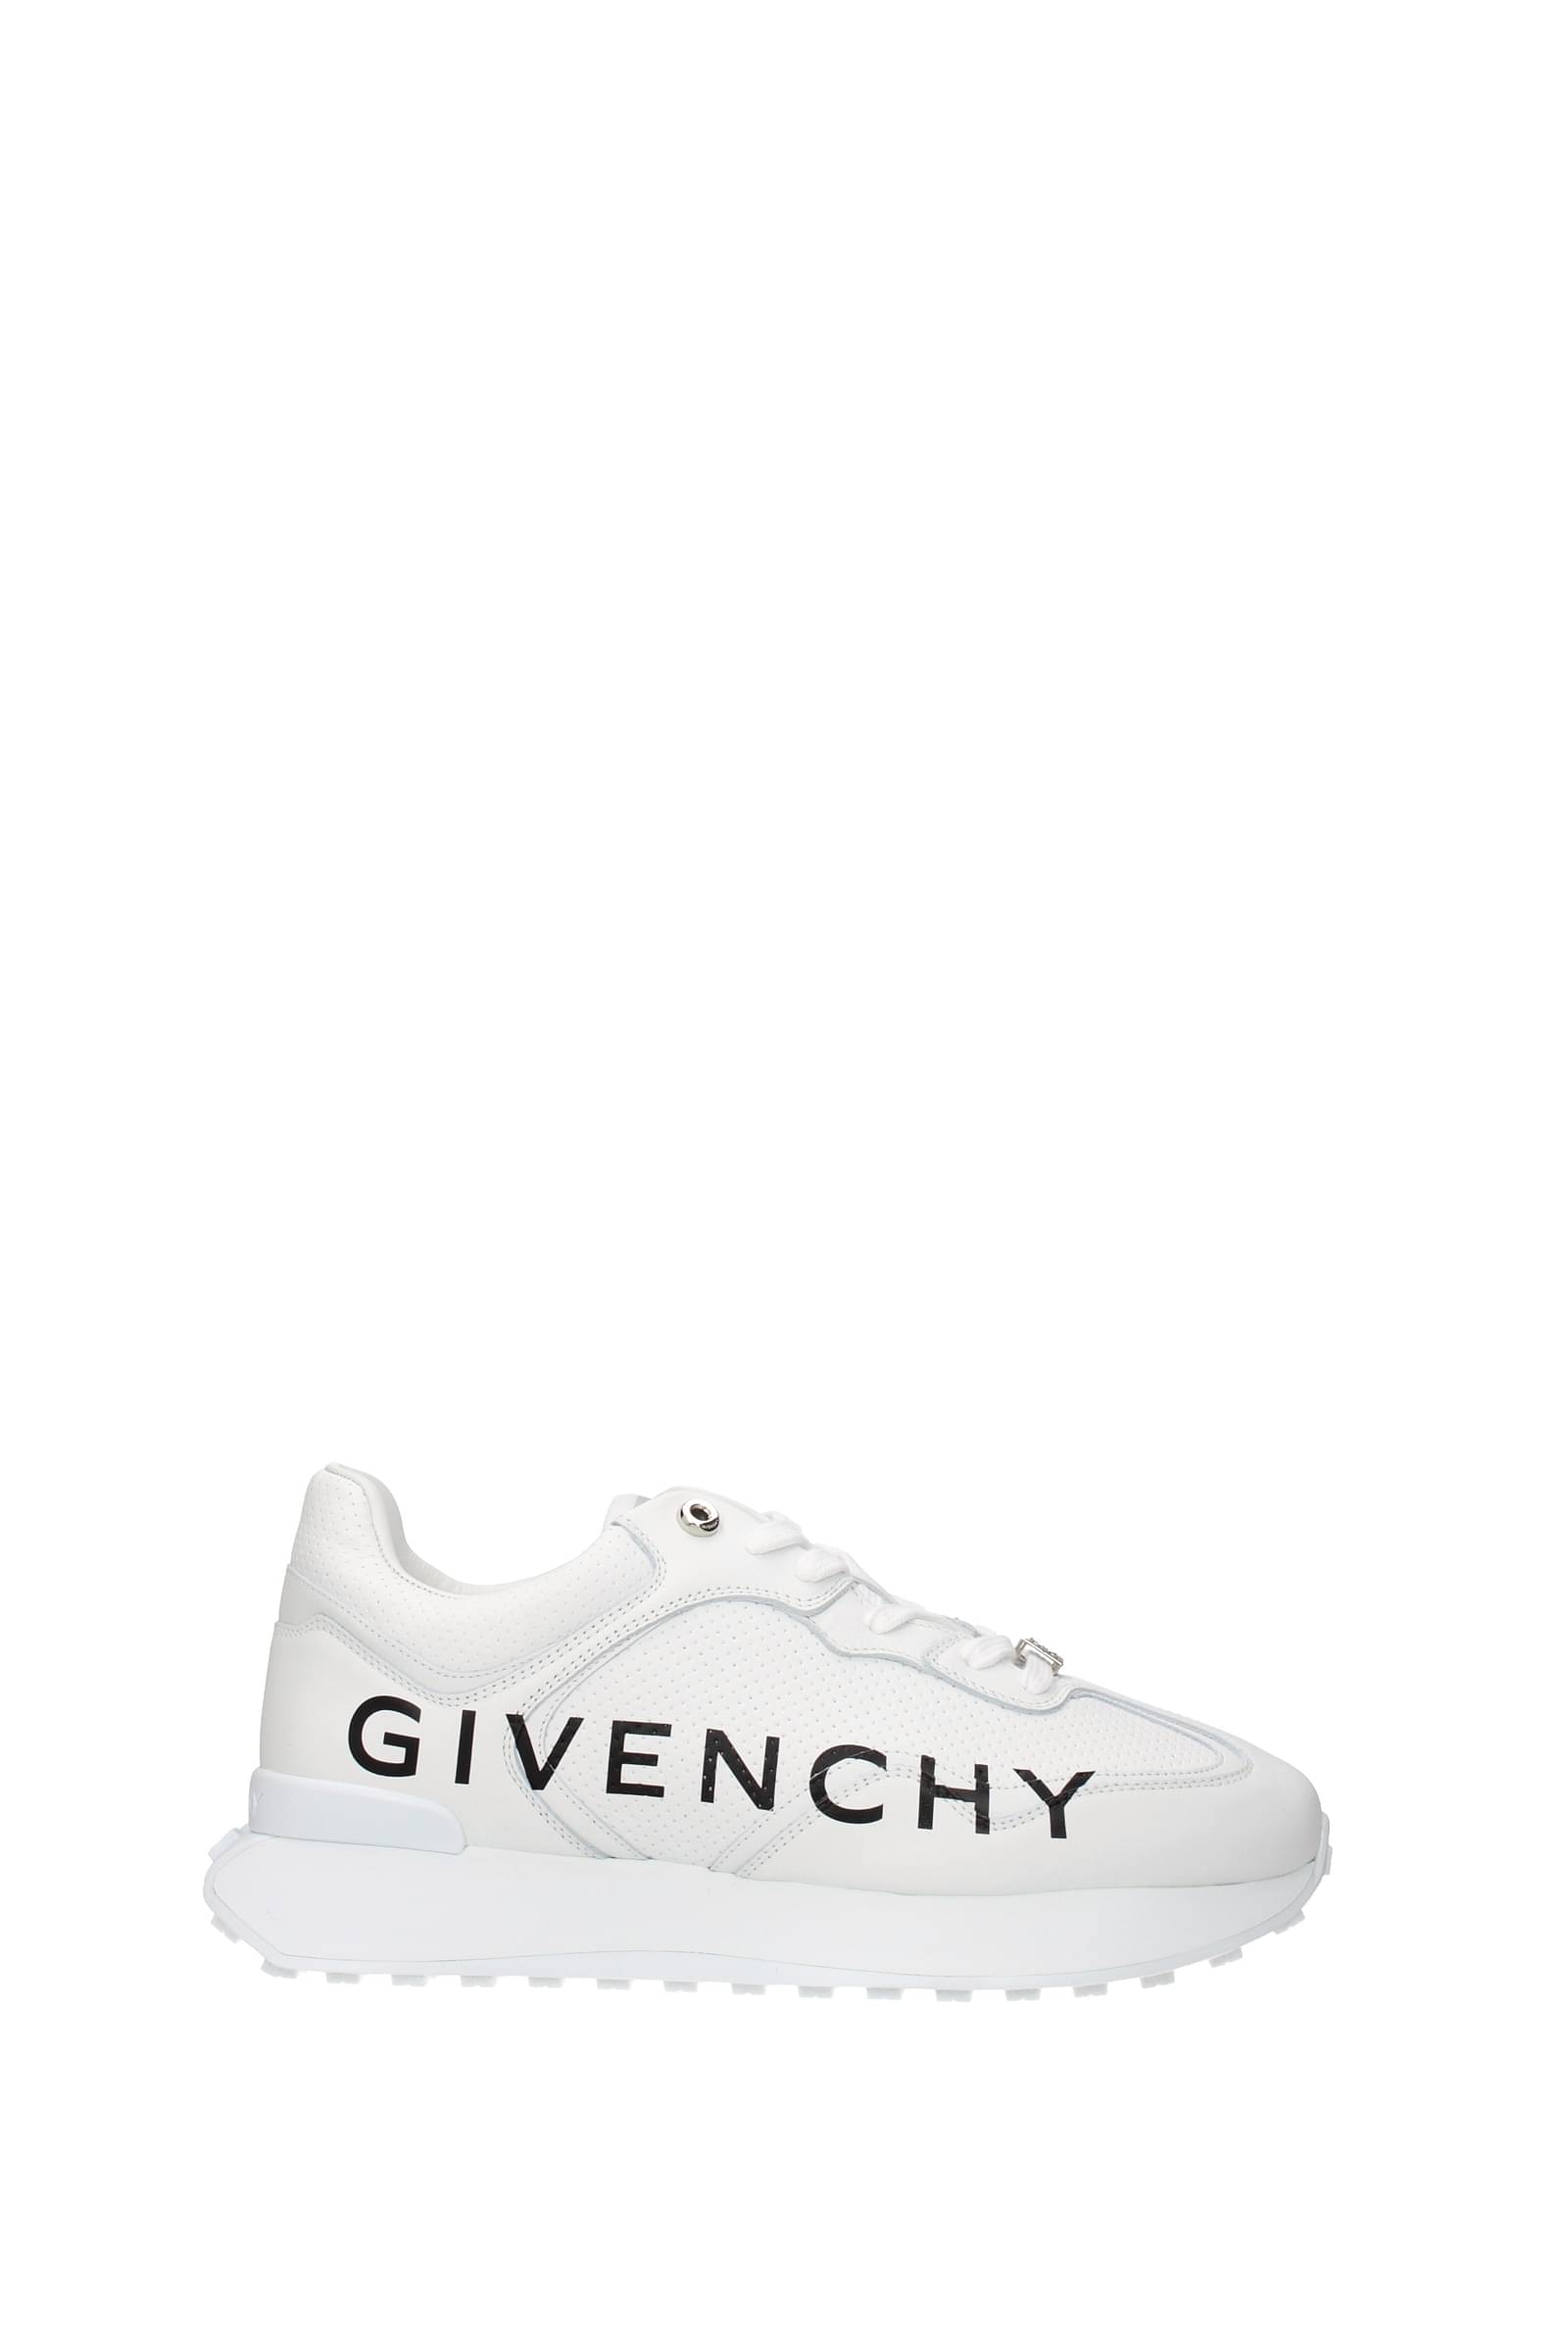 Givenchy Flat & Casual Shoes for Women | FASHIOLA.co.uk